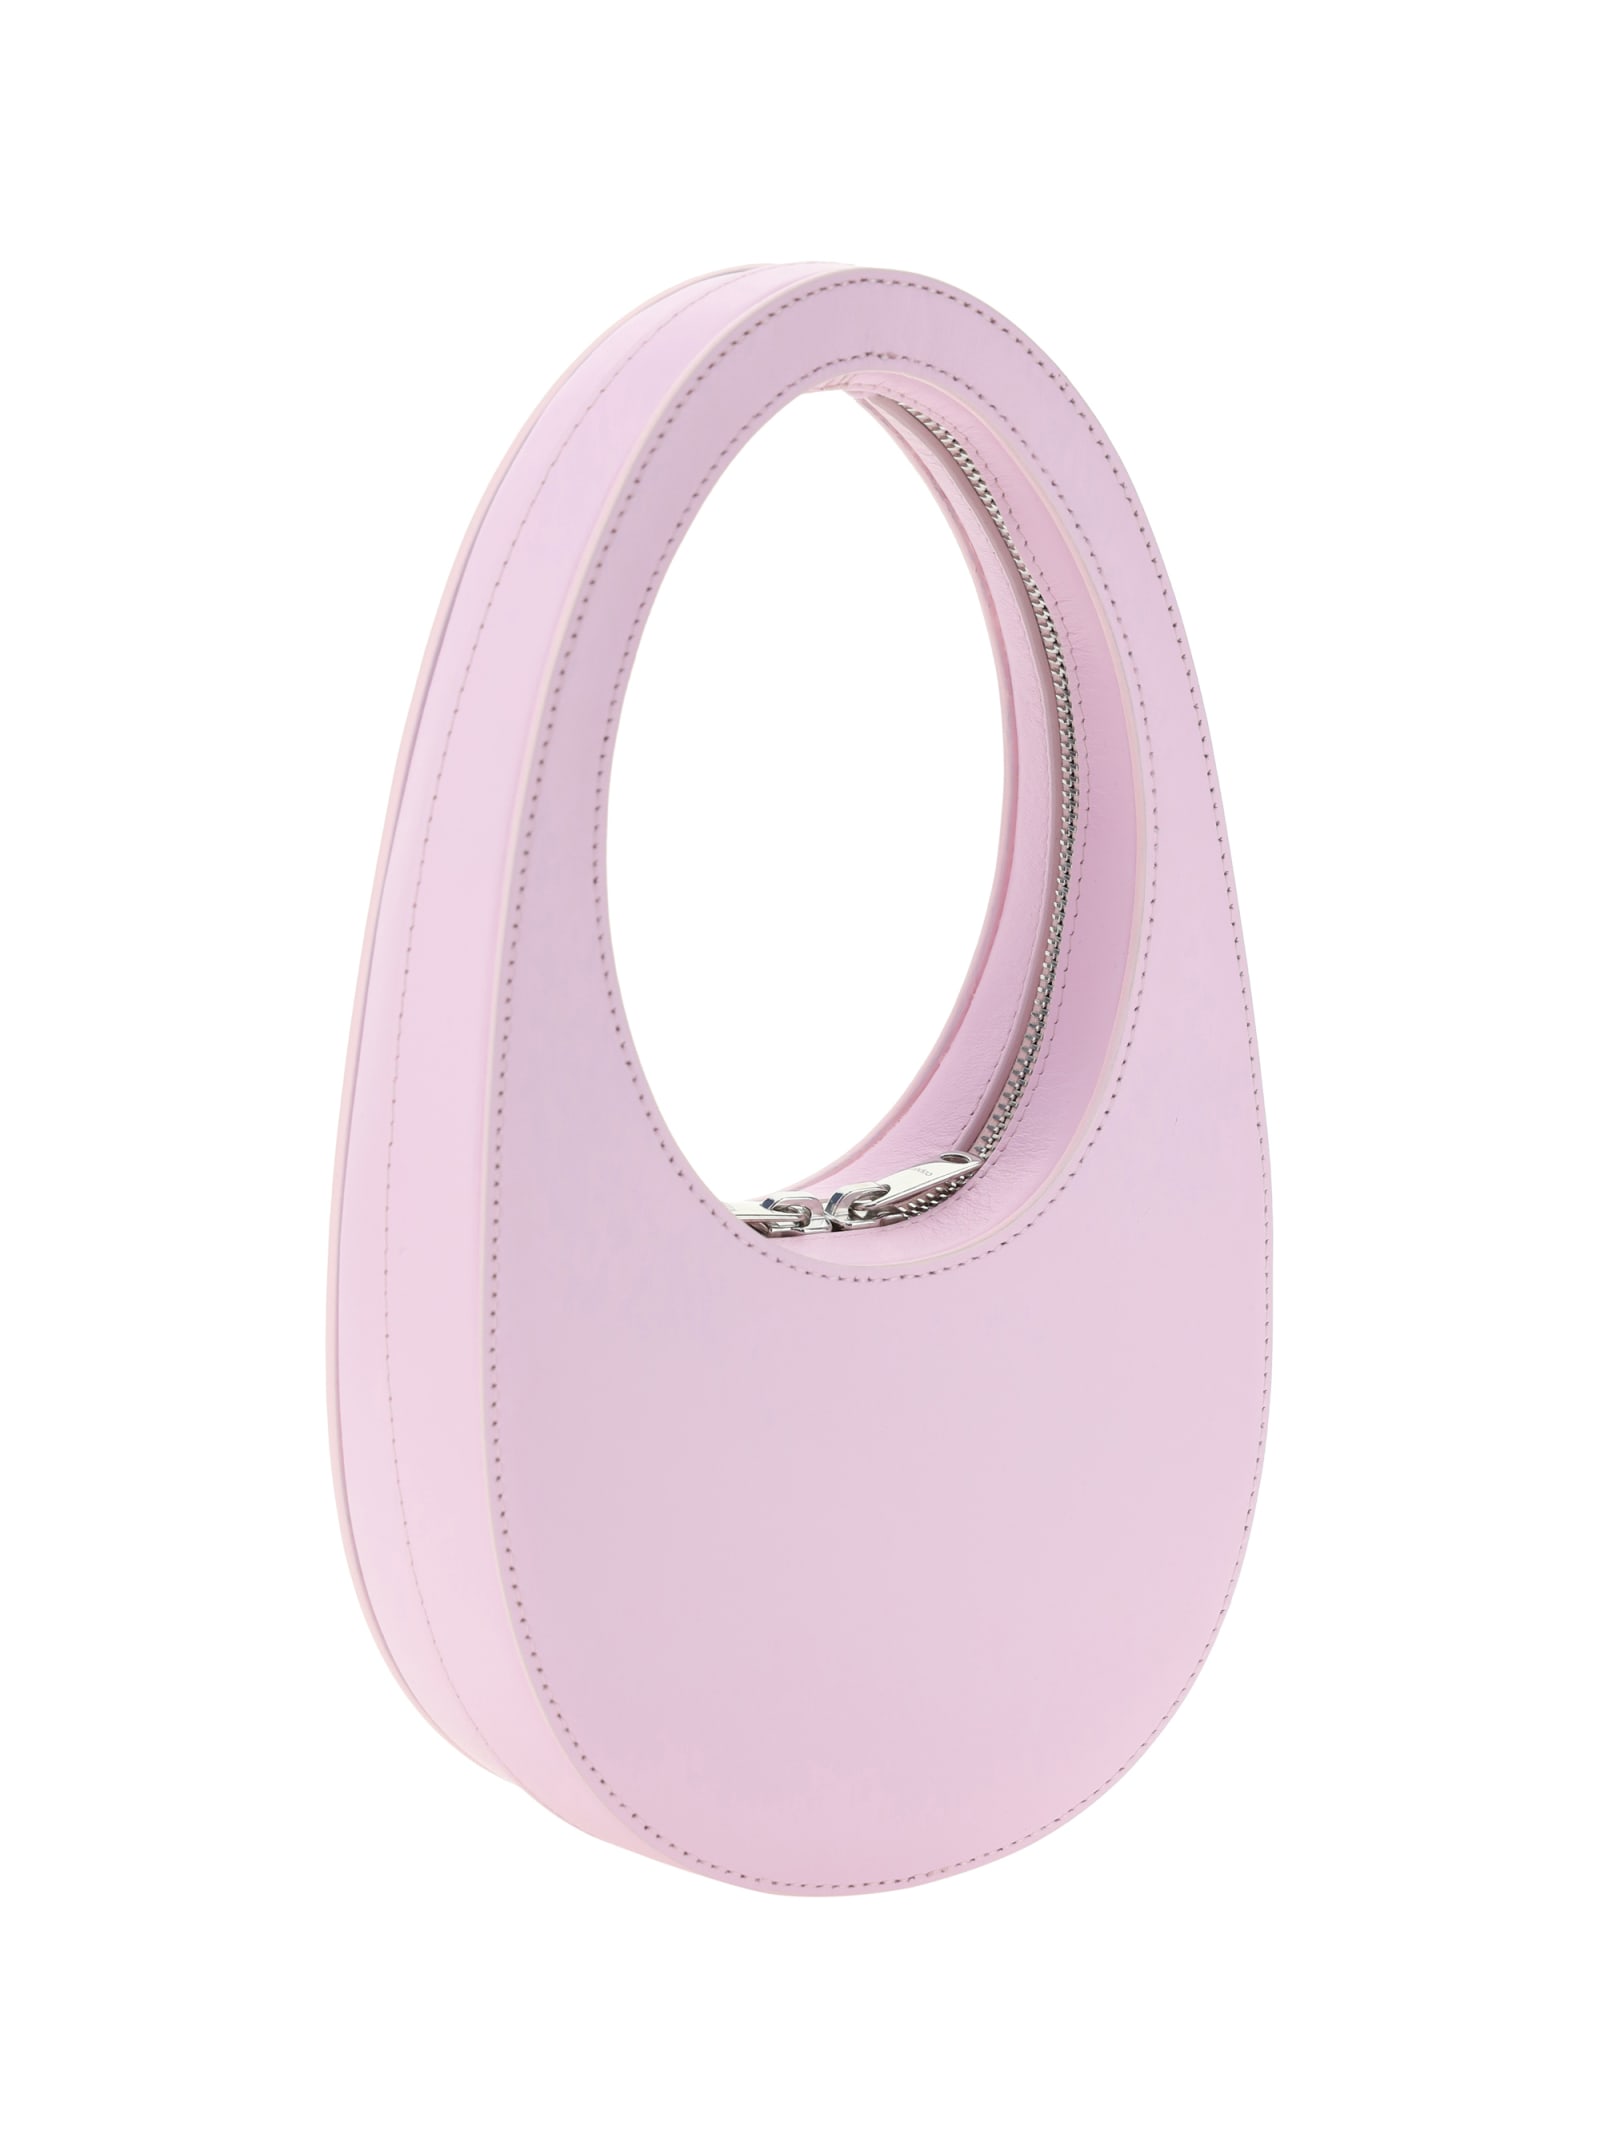 Shop Coperni Mini Swipe Bag In Light Pink